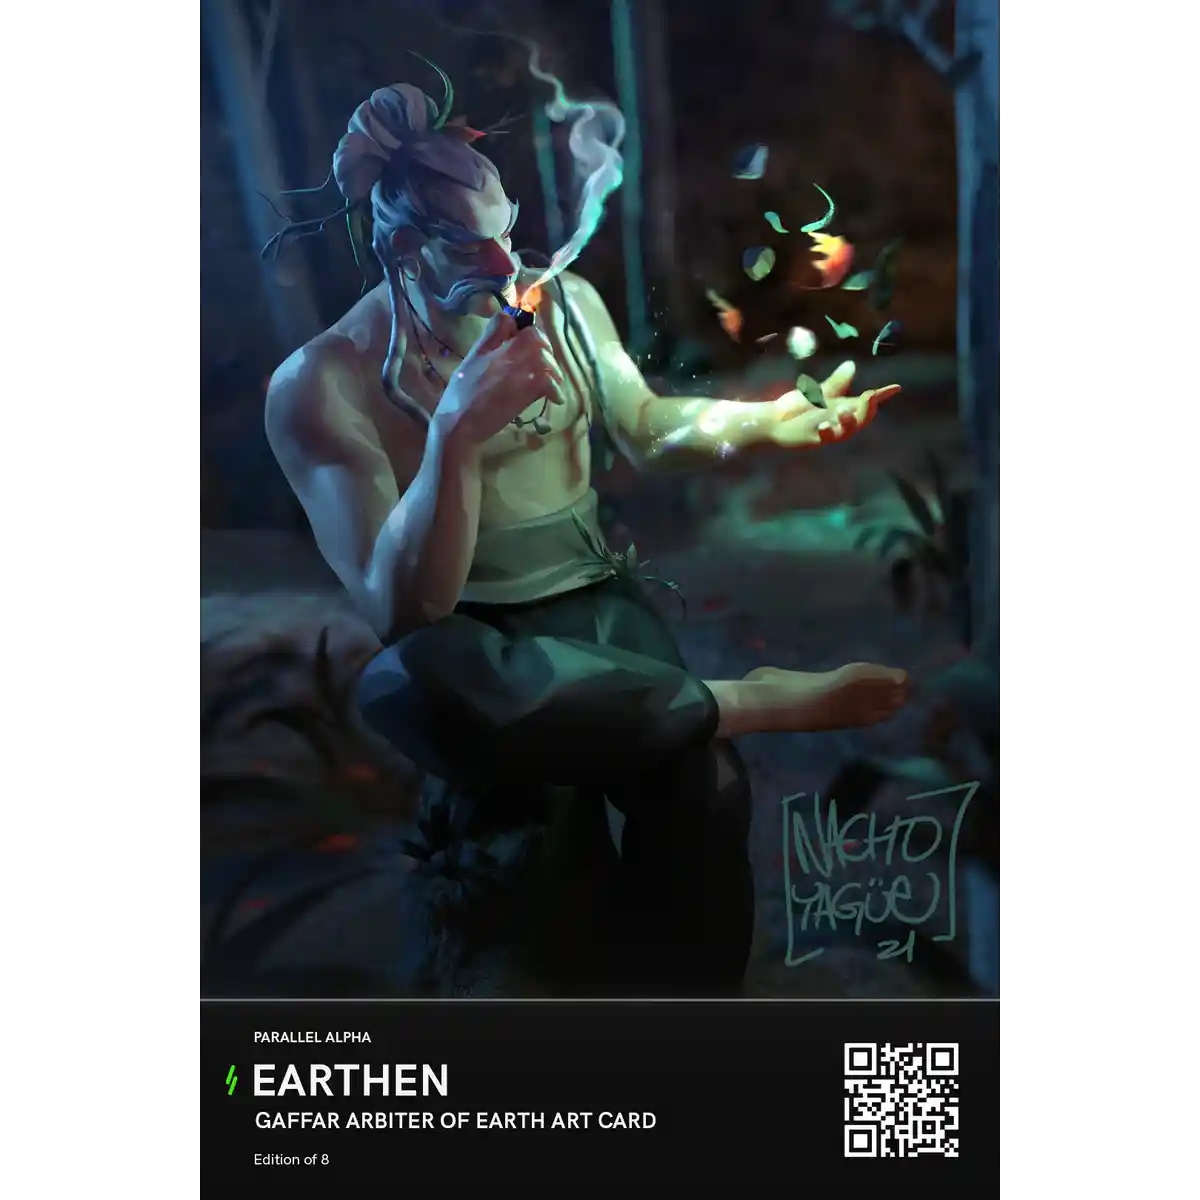 Gaffar, Arbiter of Earth Concept Art Card